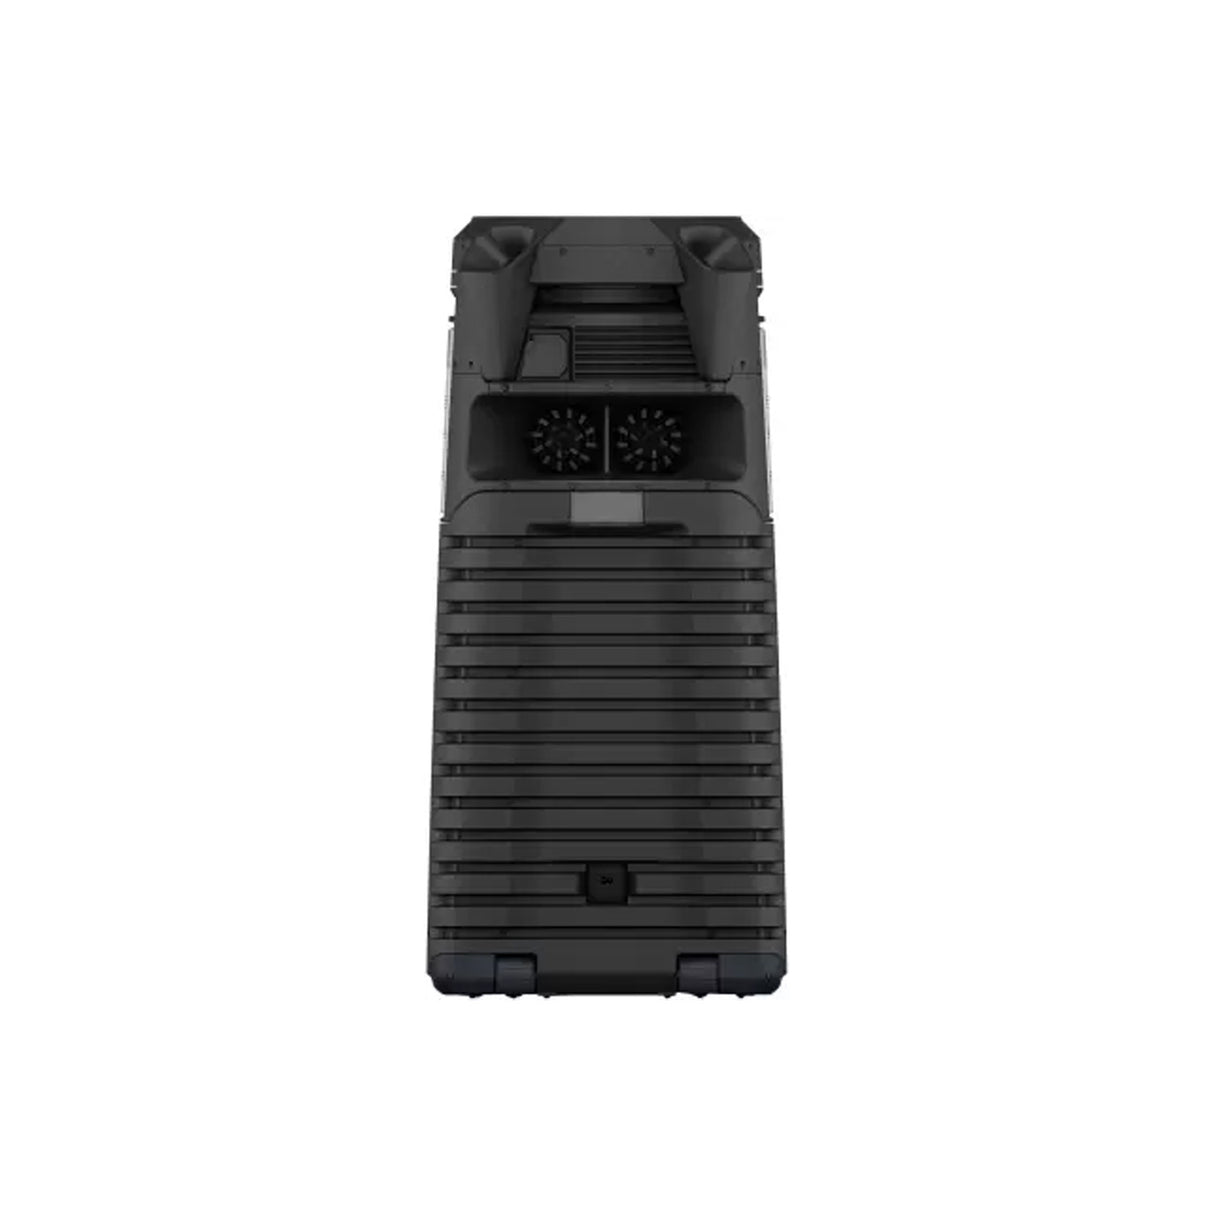 Sony MHC-V73D Party Speaker - Black, Bluetooth brilliance.